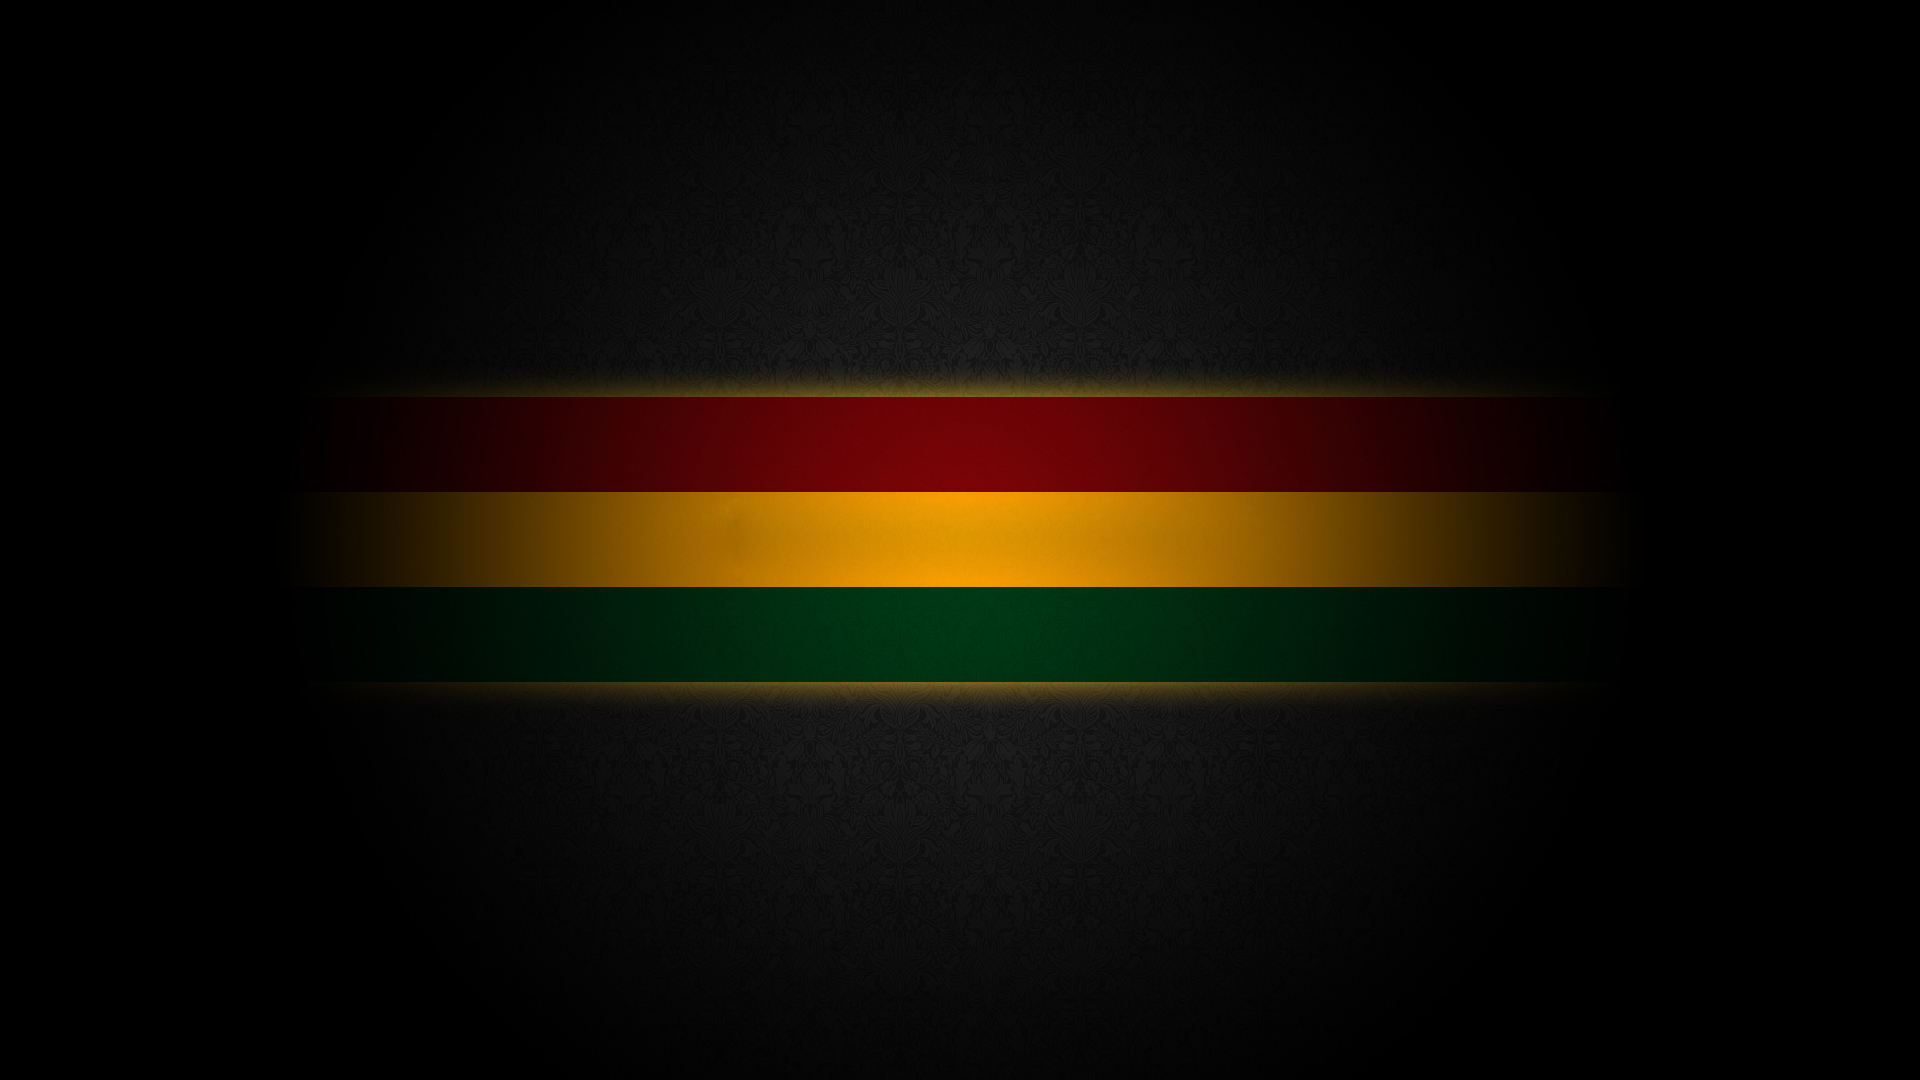 Rastafari Backgrounds